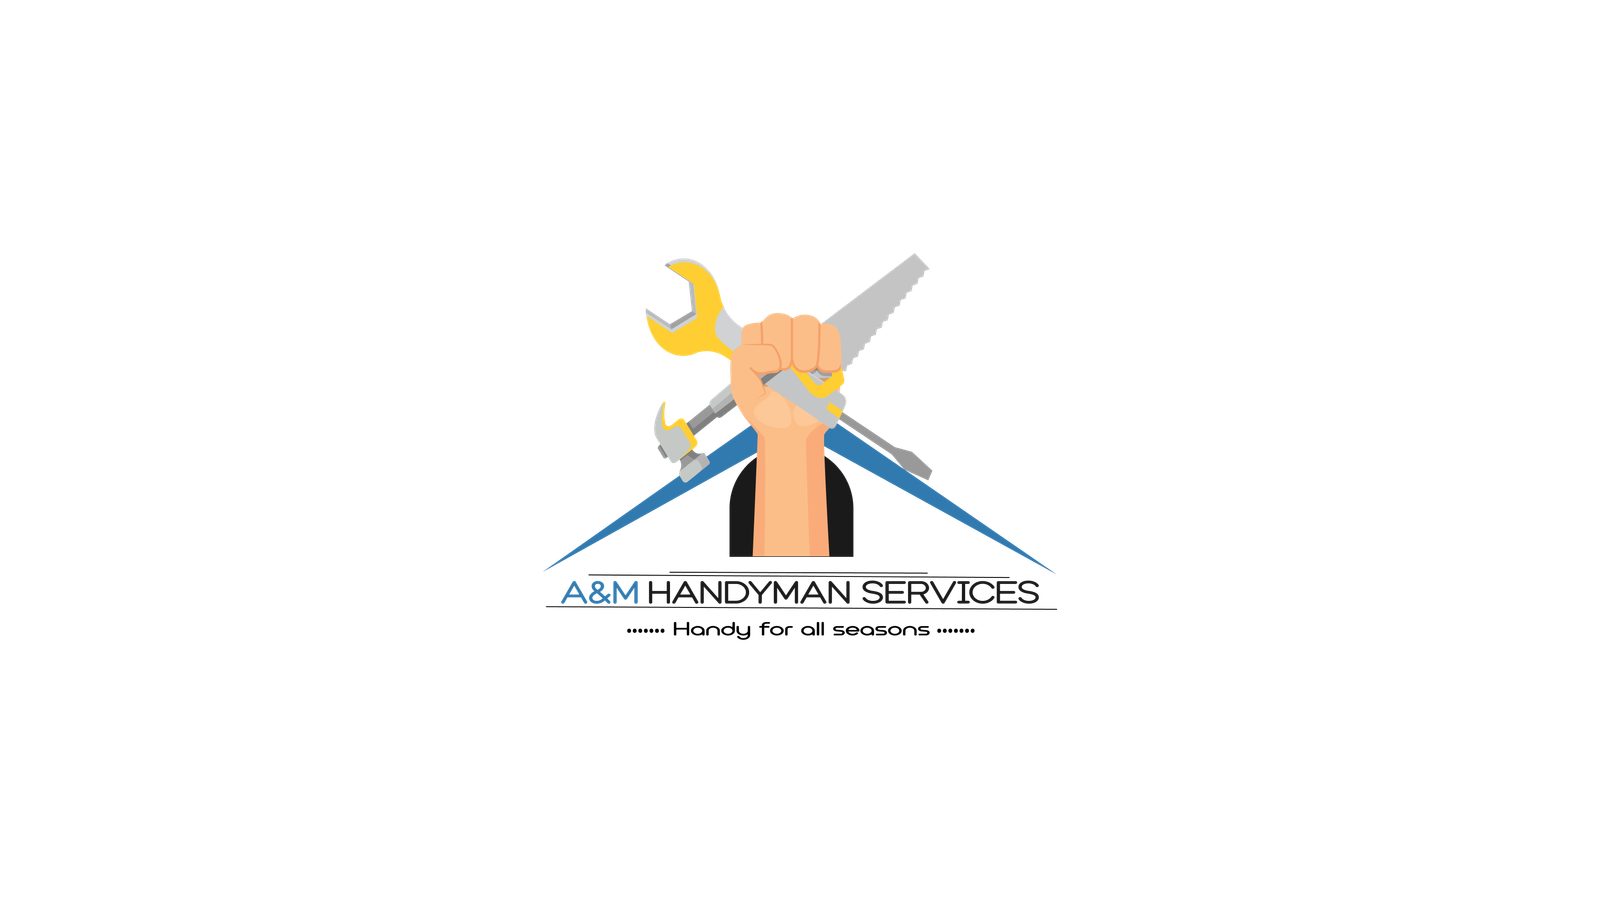 A M Handyman Services